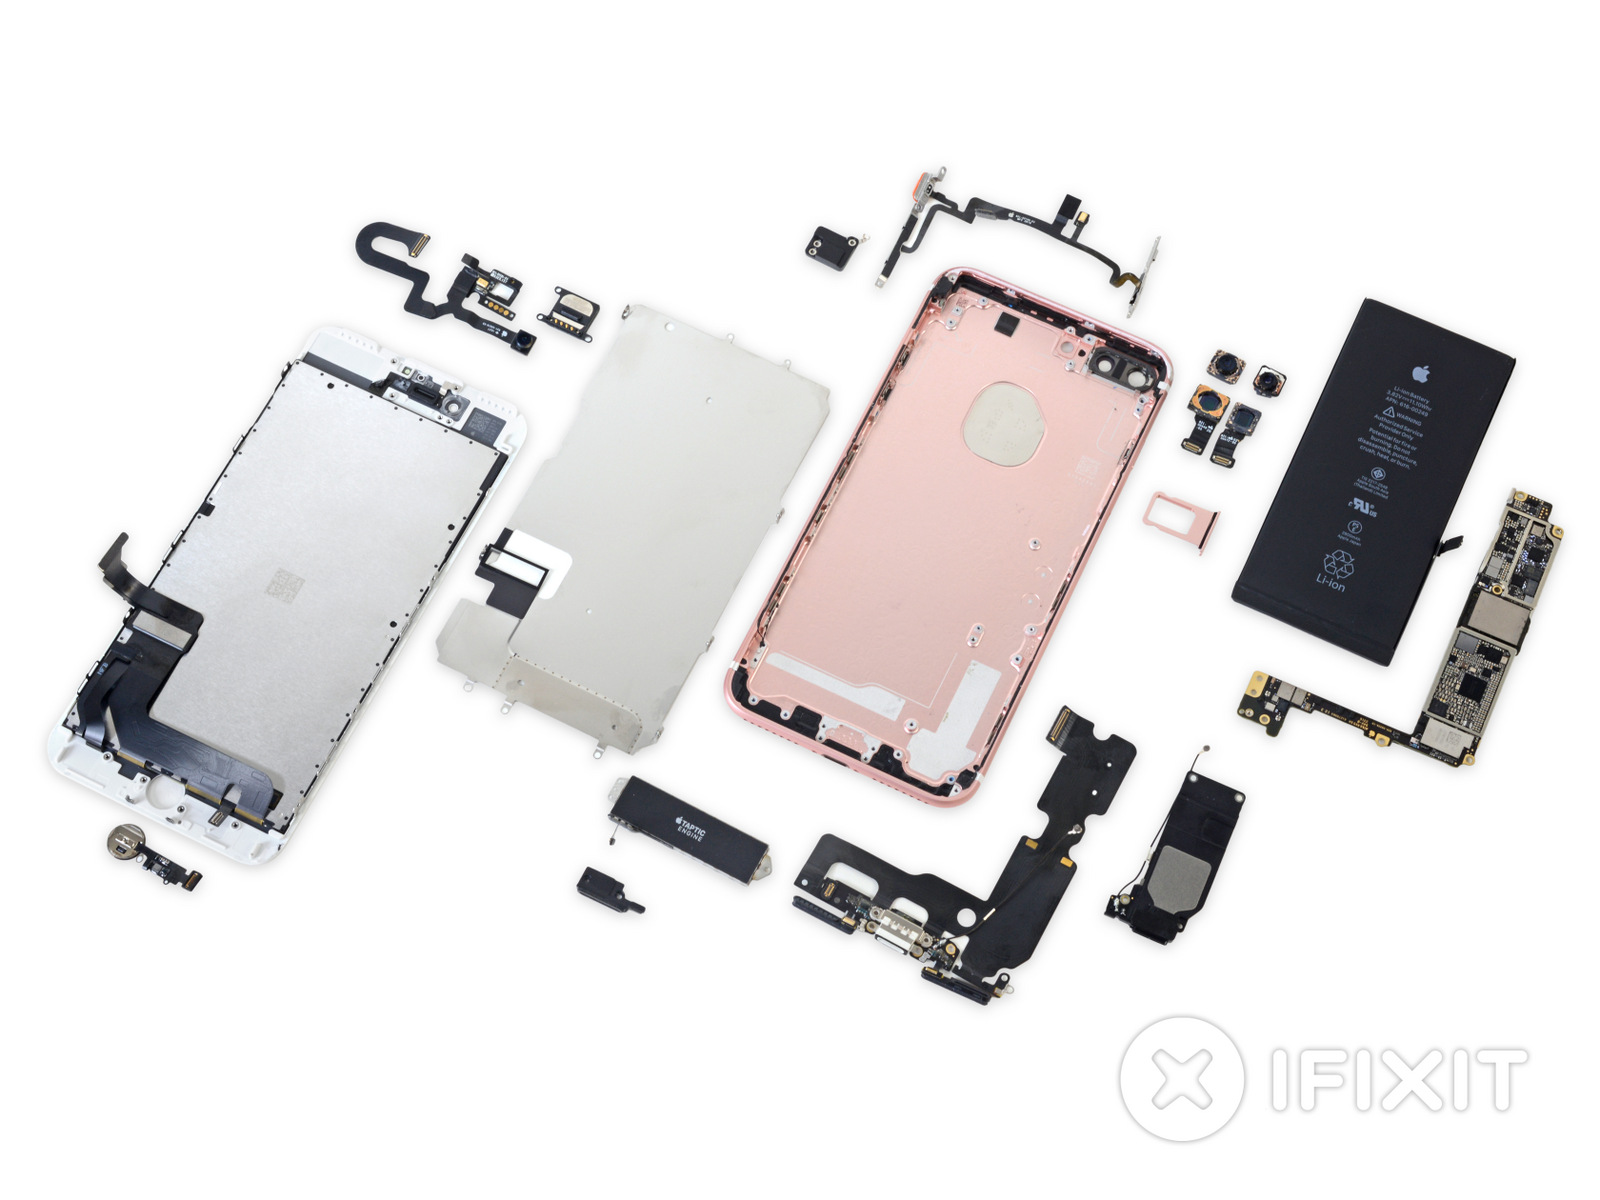 iPhone 7 teardowns: Big Taptic Engine, Intel modems, waterproofing